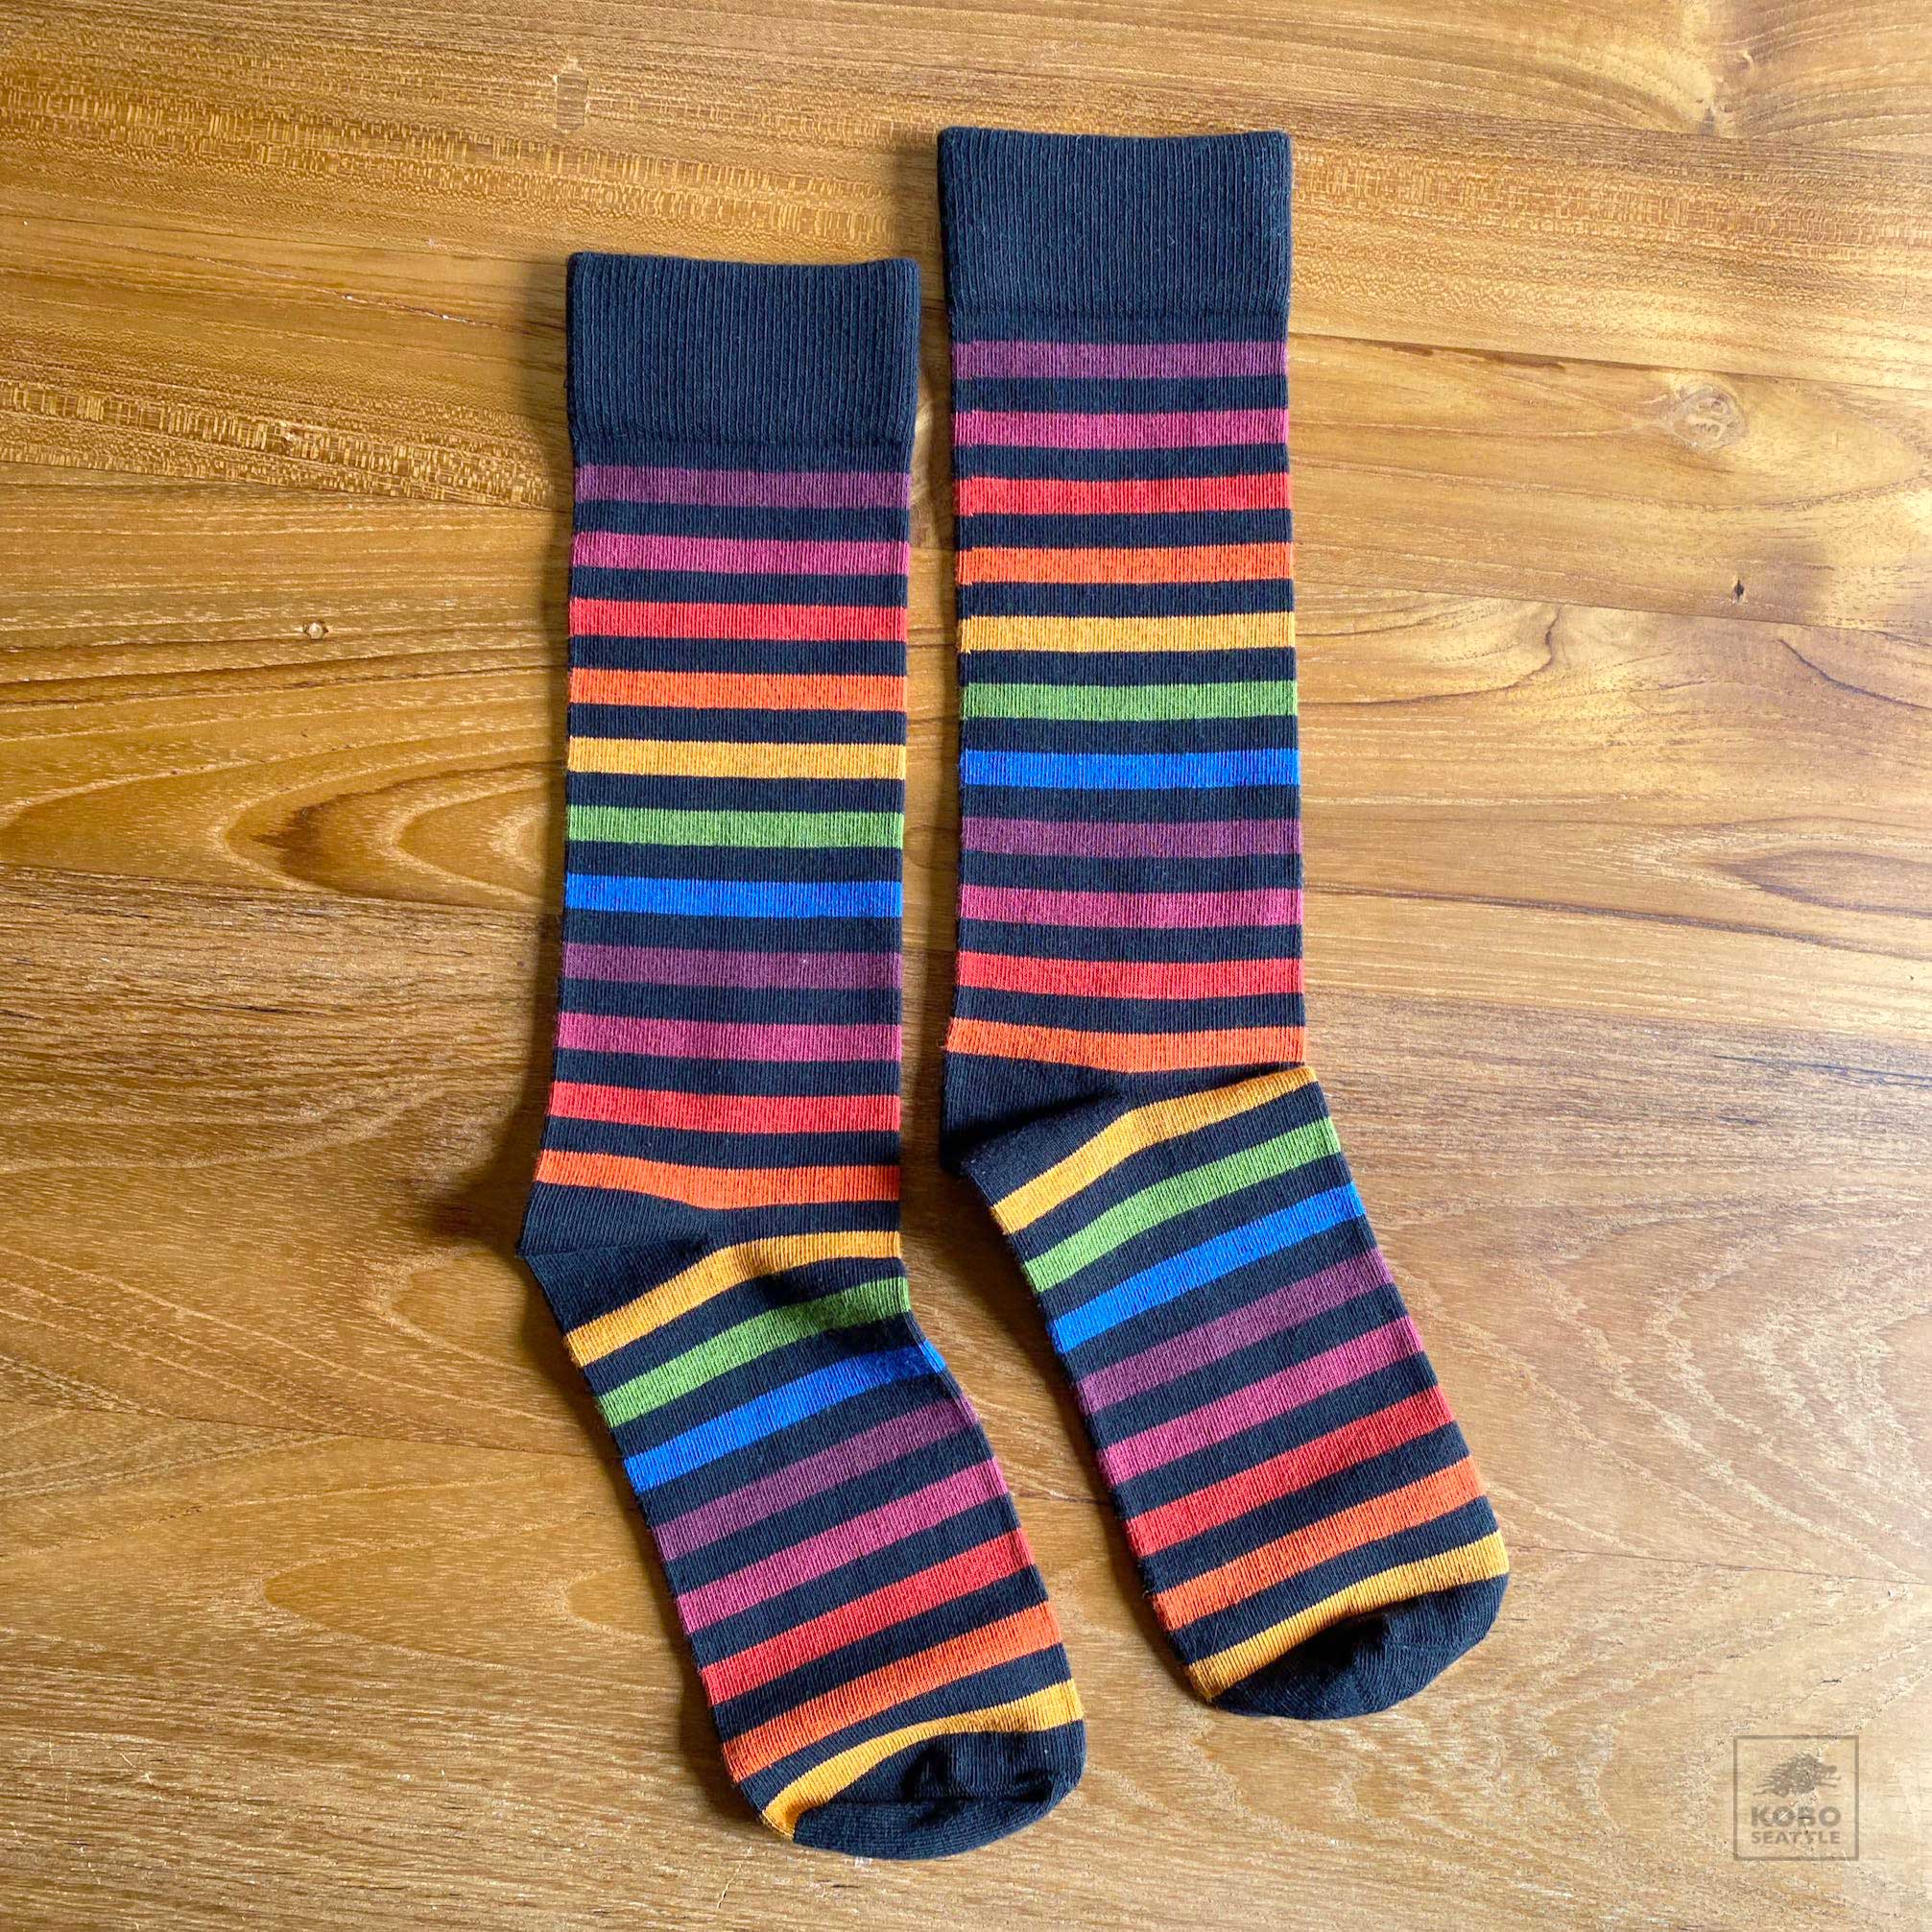 Cotton Blend Striped Socks - multicolor + black - KoboSeattle